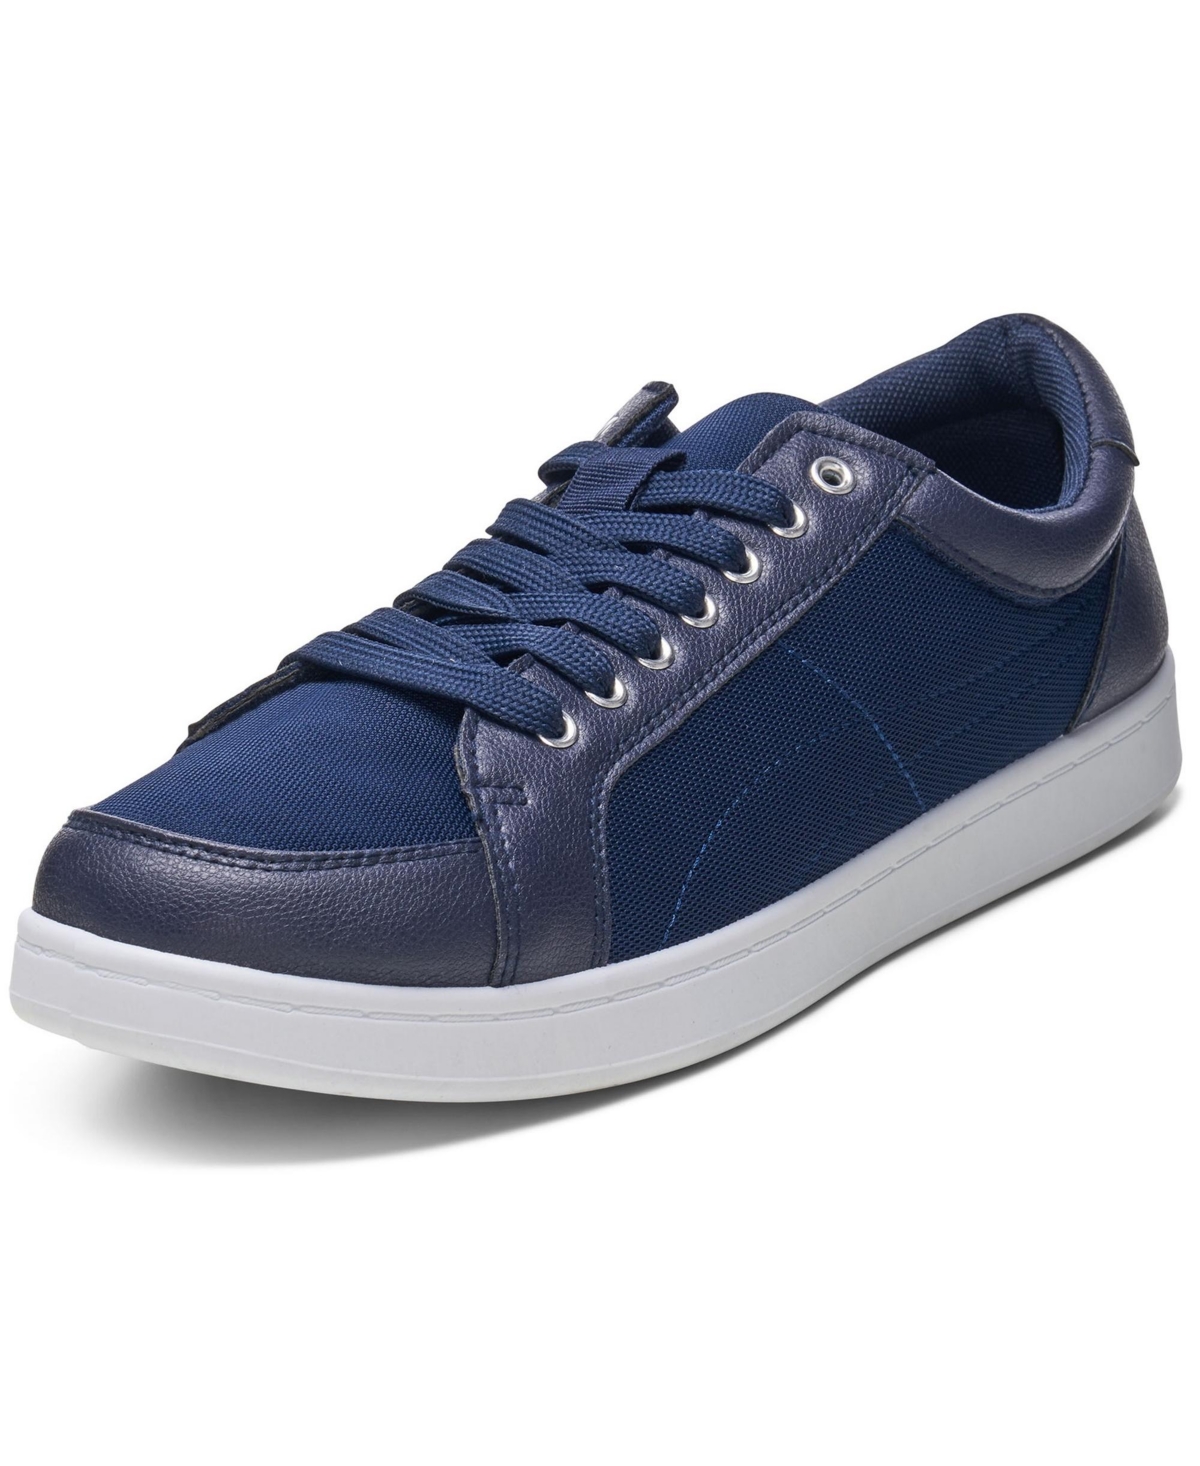 Craig Mens Fashion Sneakers Retro Lace Up Low Top Tennis Shoes - Blue